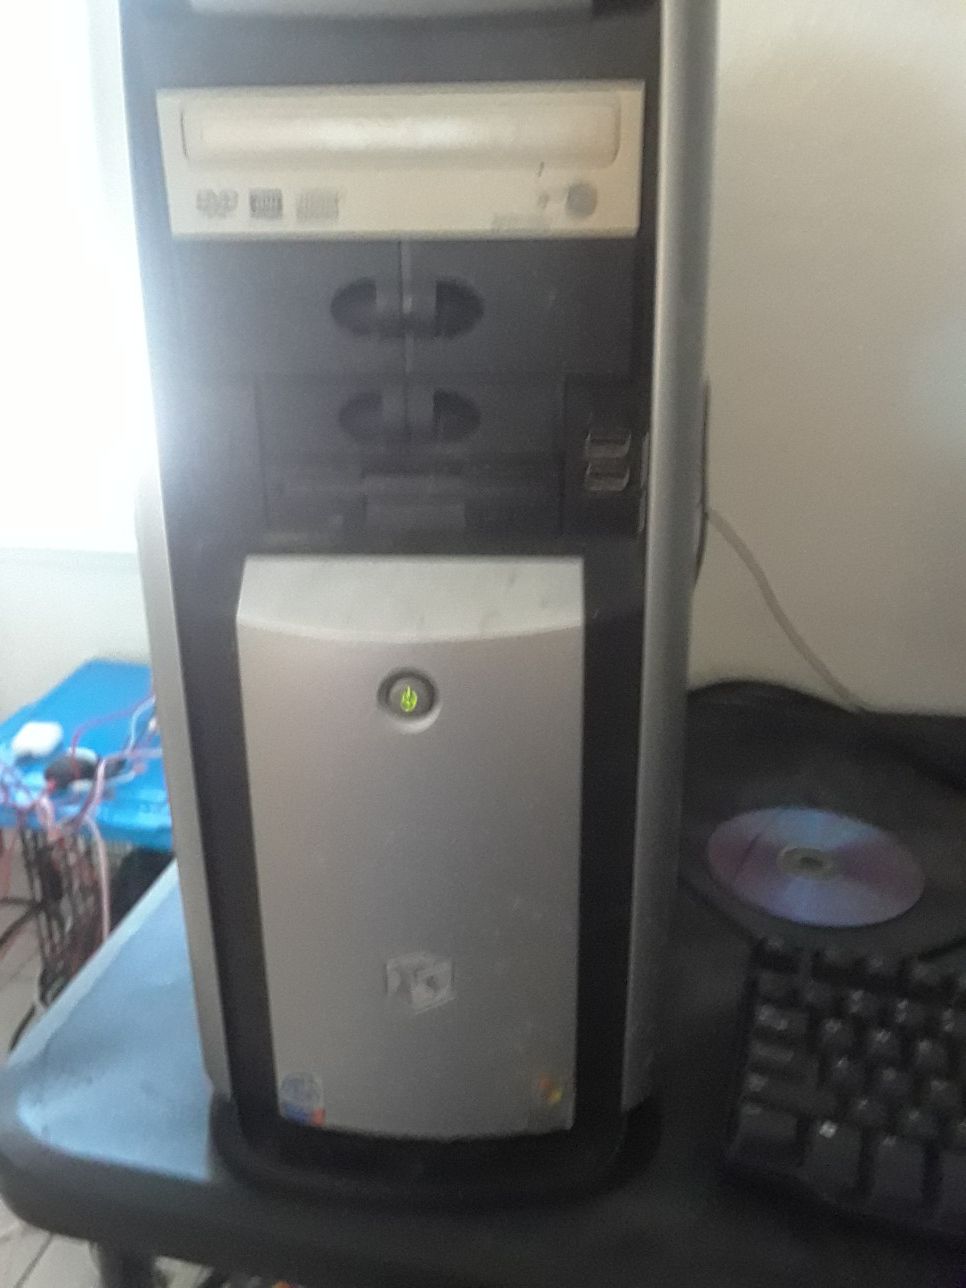 I need to get rid of a Compaq Presario desktop computer for parts or repair